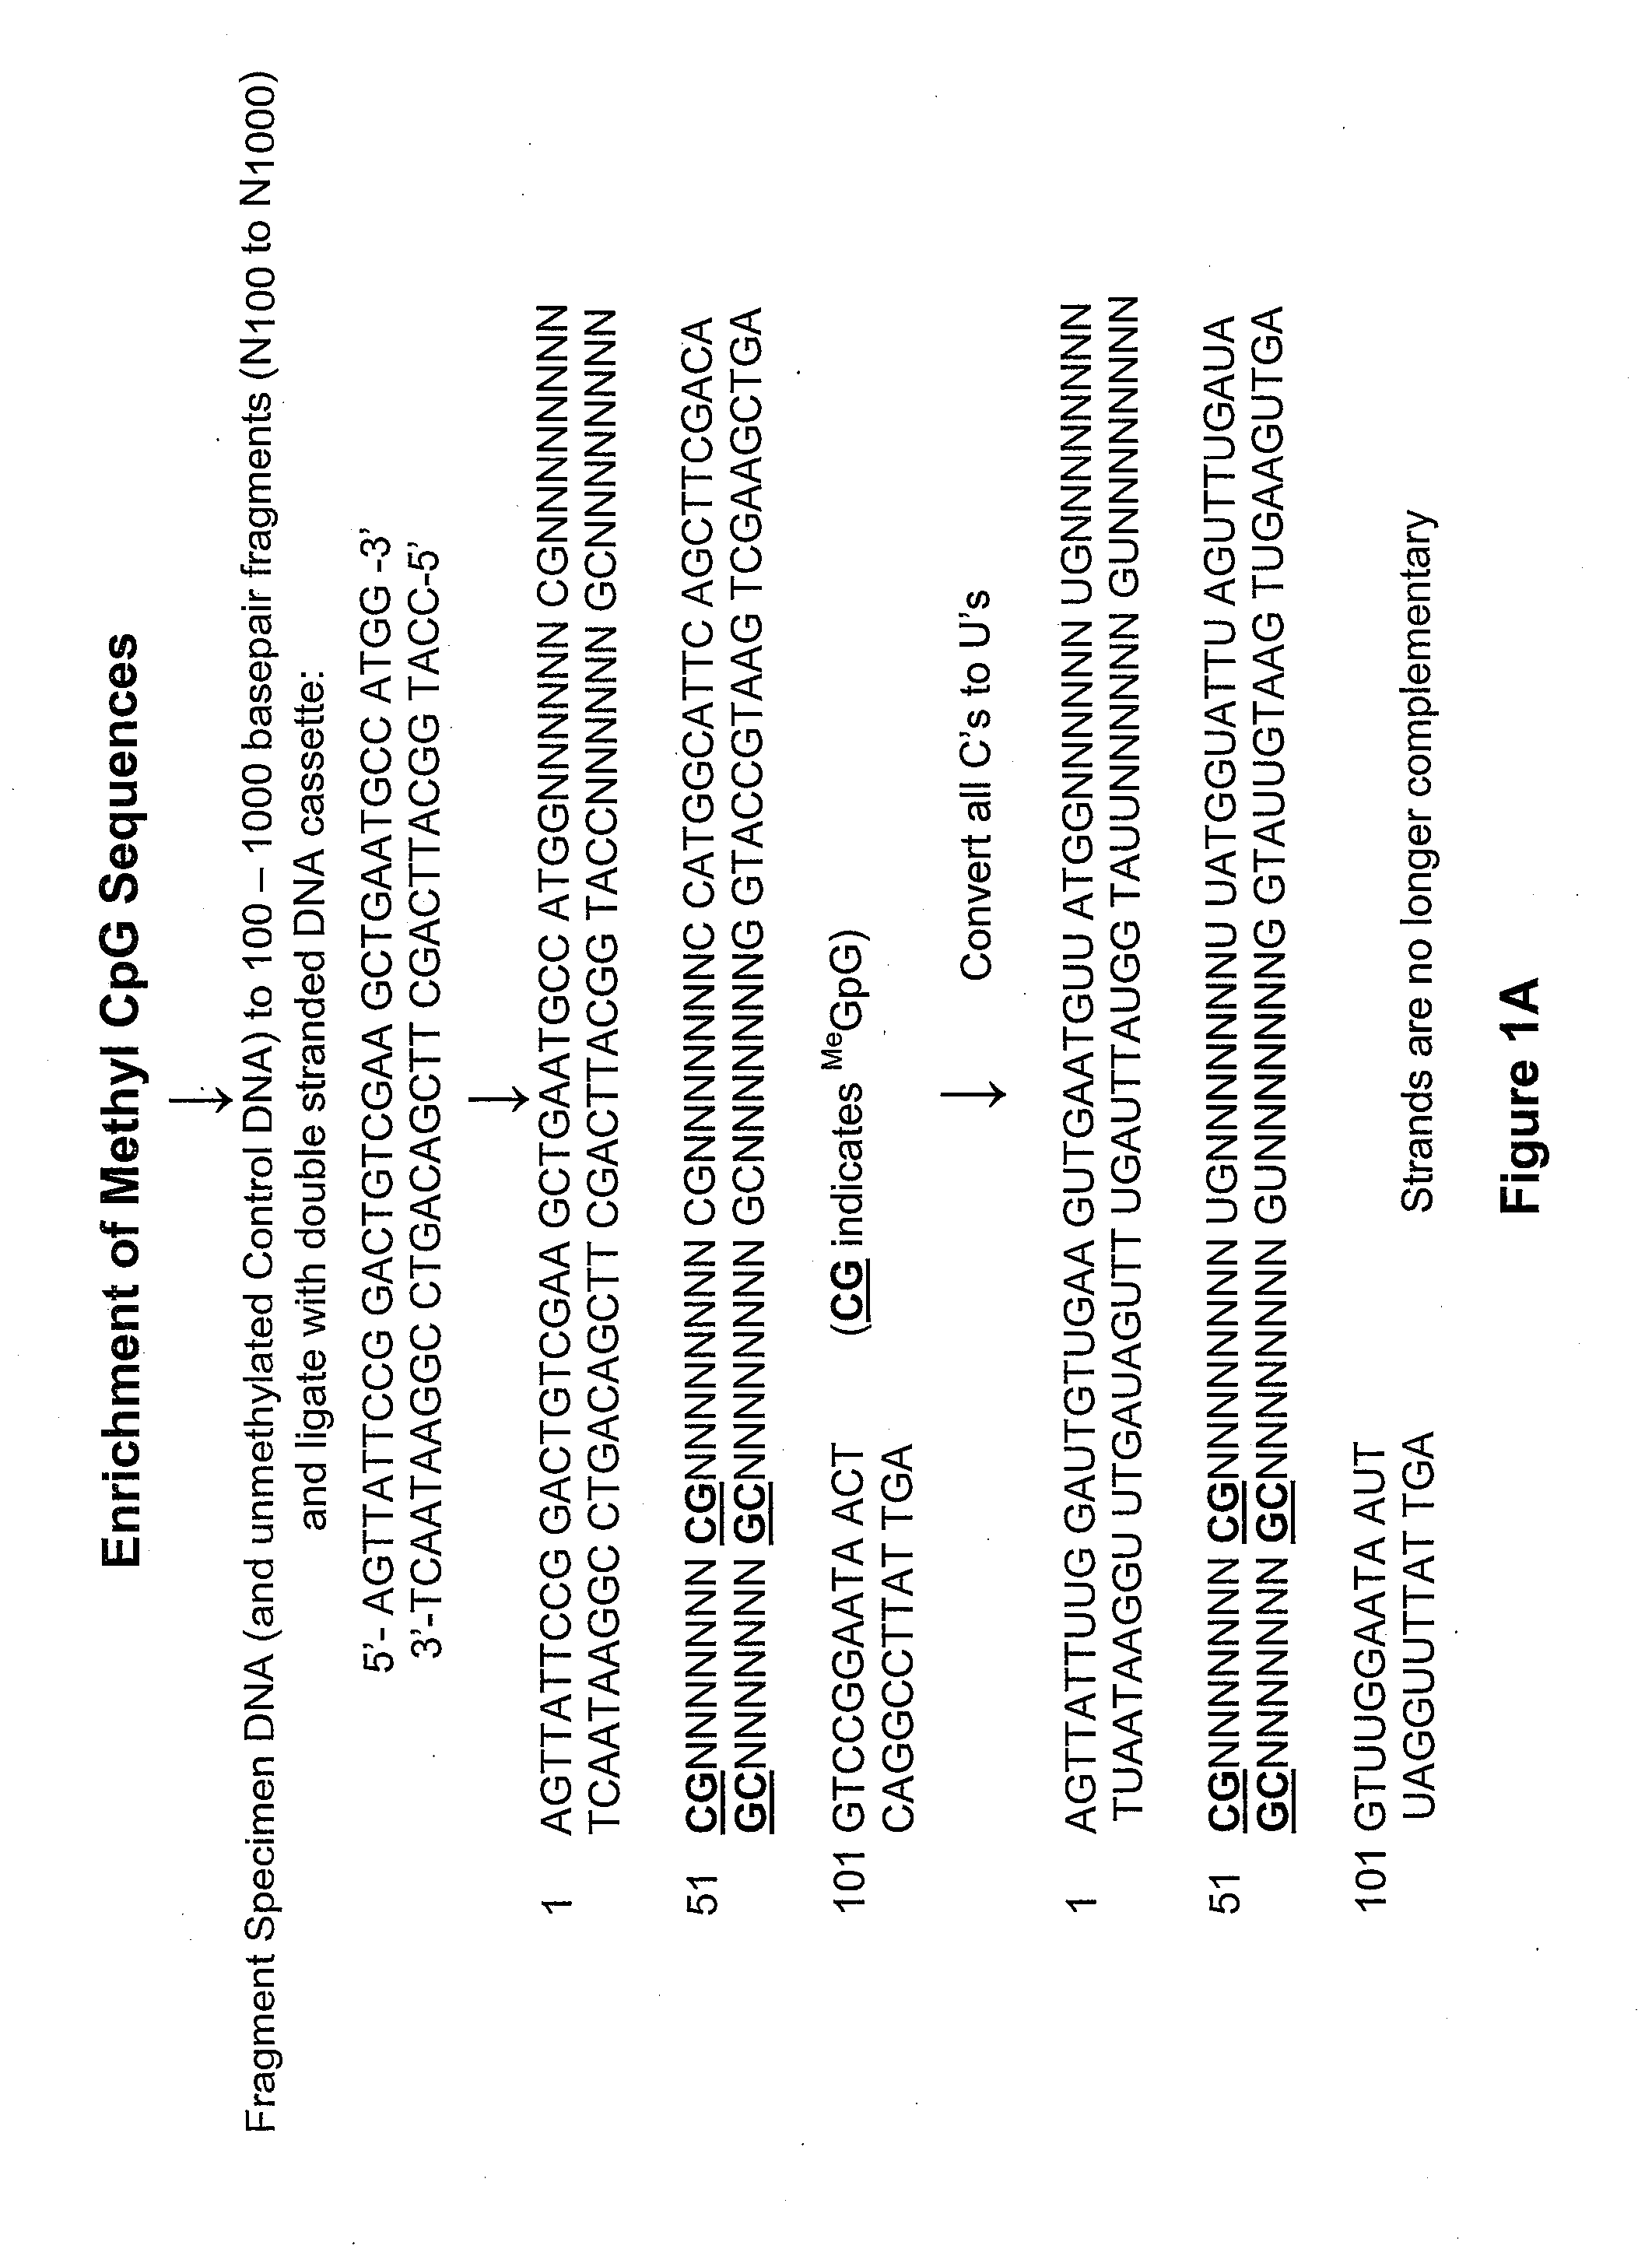 Methods for Detection of Methyl-CpG Dinucleotides